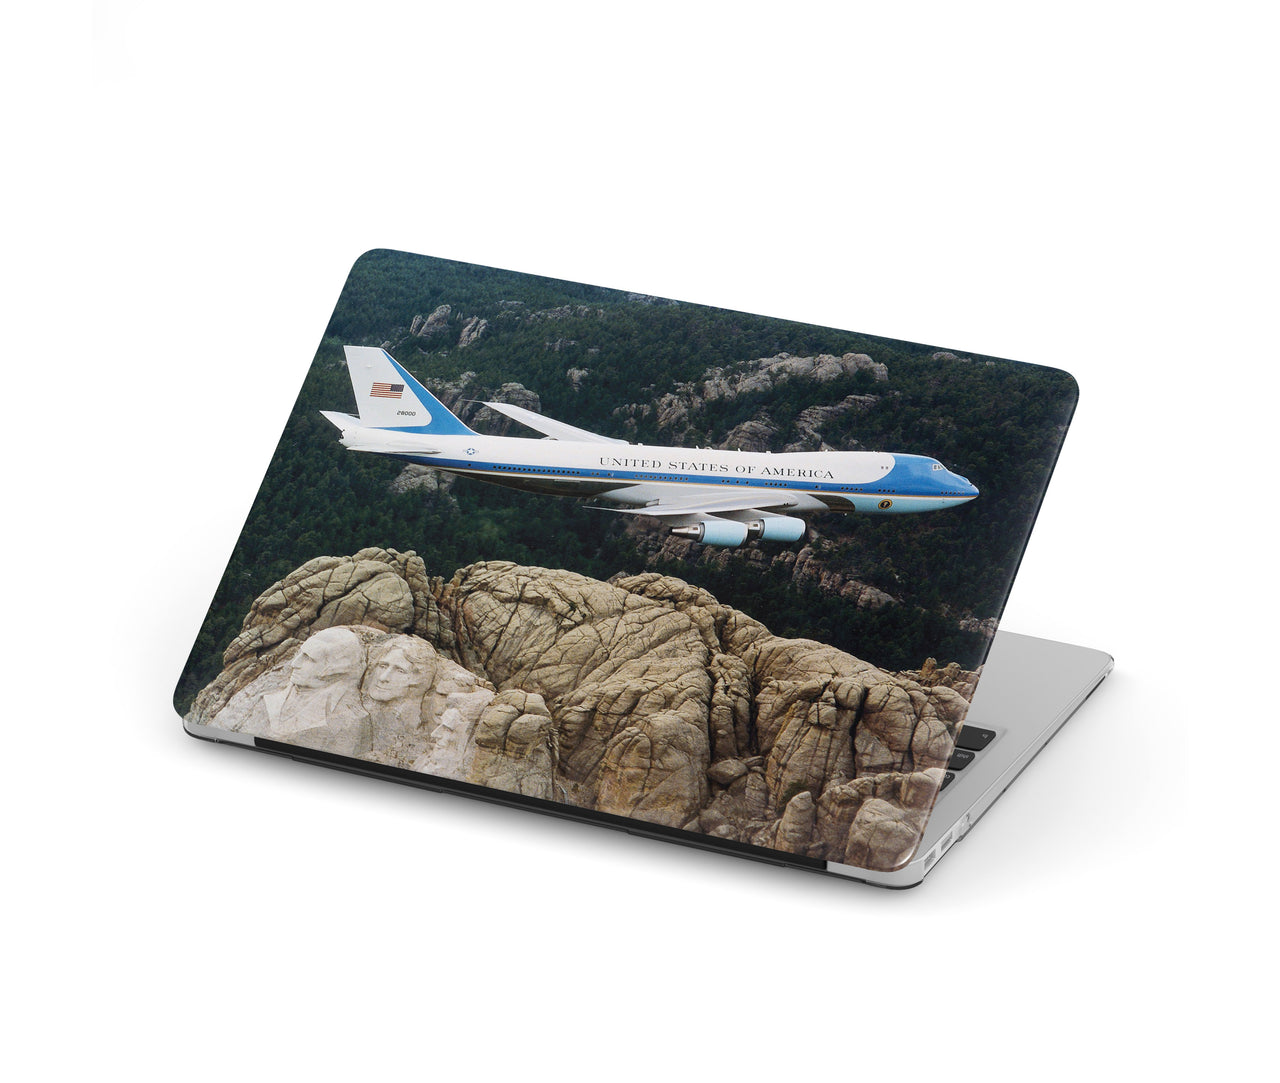 Cruising United States of America Boeing 747 Printed Pillows Designed Macbook Cases